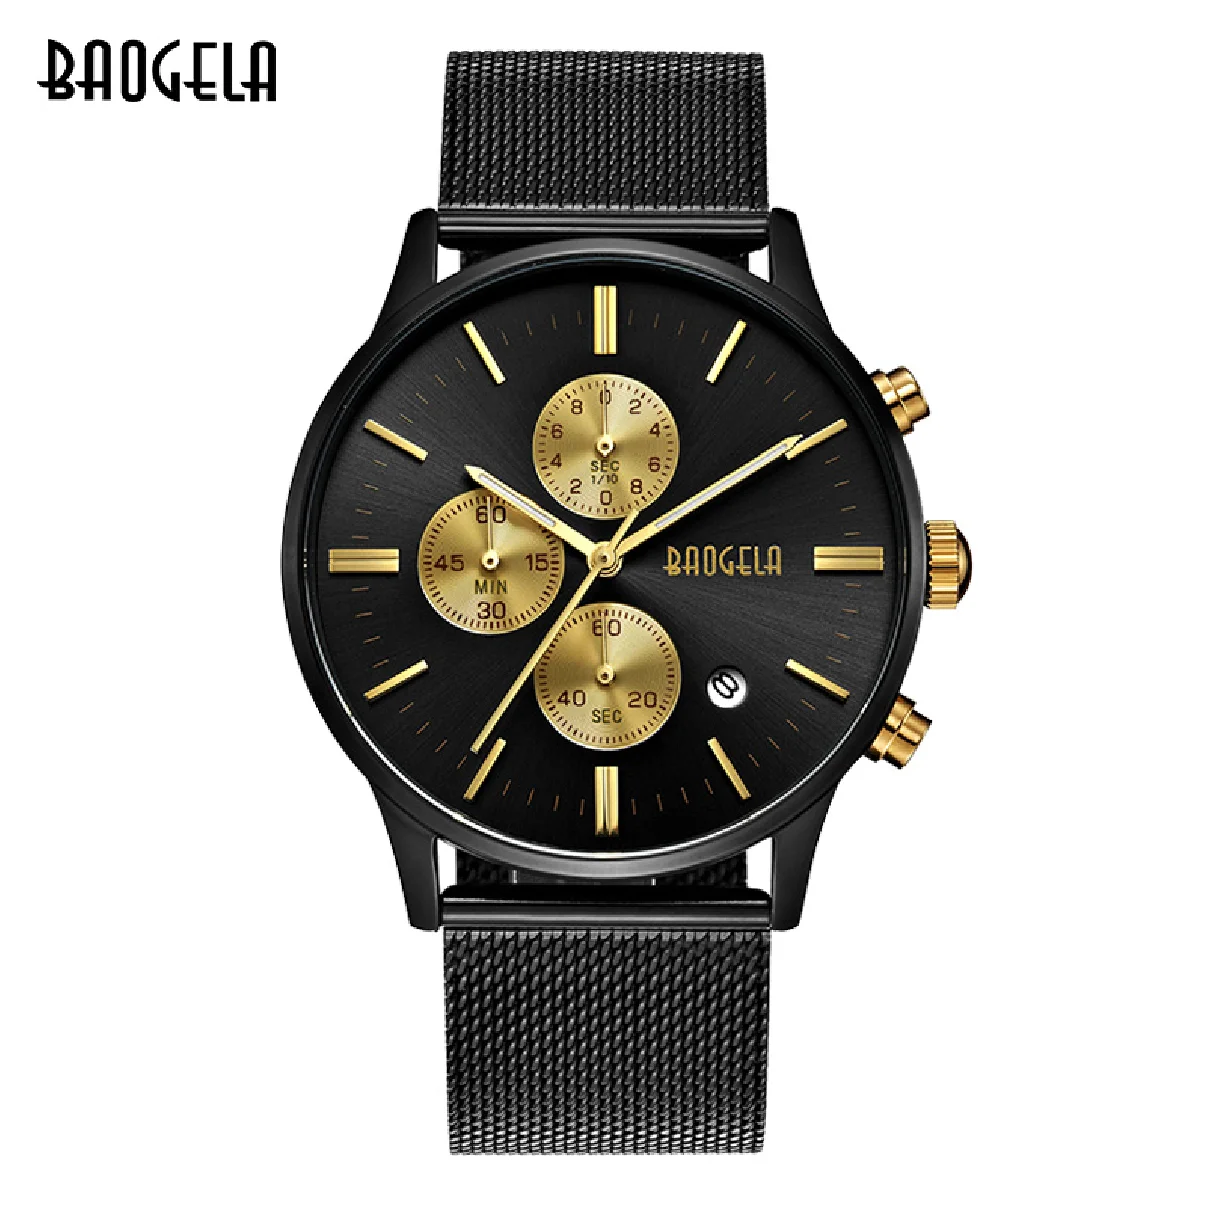 

BAOGELA Men's Watch Waterproof, Analog Quartz Wrist Watches Gold With Black Stainless Steel Mesh Band, Chronograph Date 1611Alex